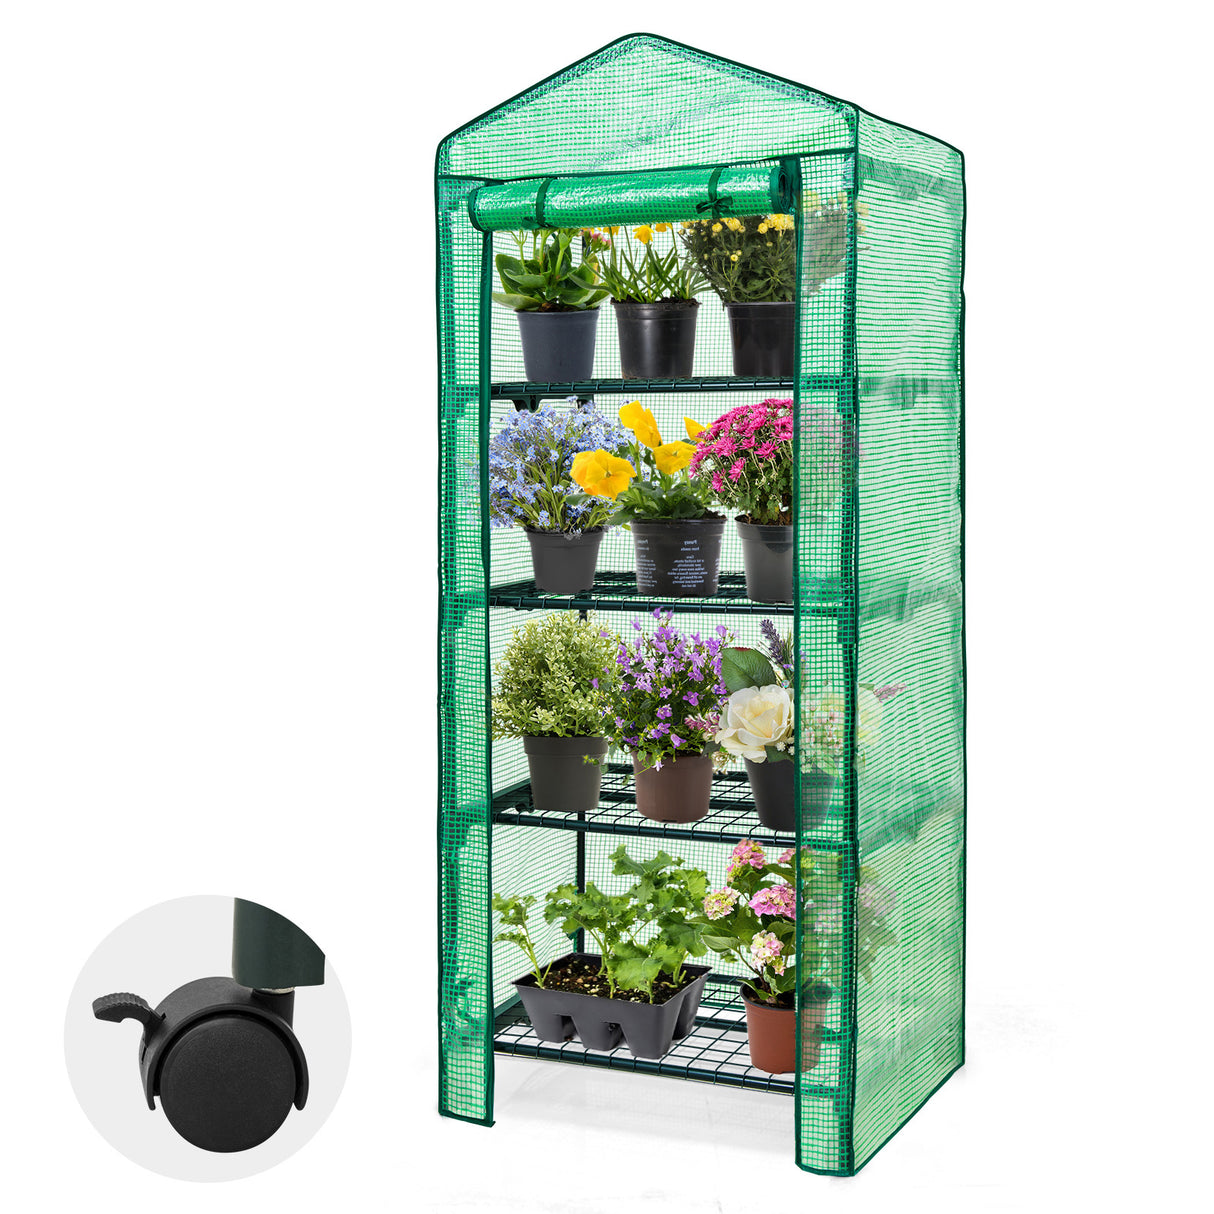 EAGLE PEAK Mini Rolling Greenhouse w/ Caster Wheels, 3-Tier or 4-Tier Portable Rack Shelves